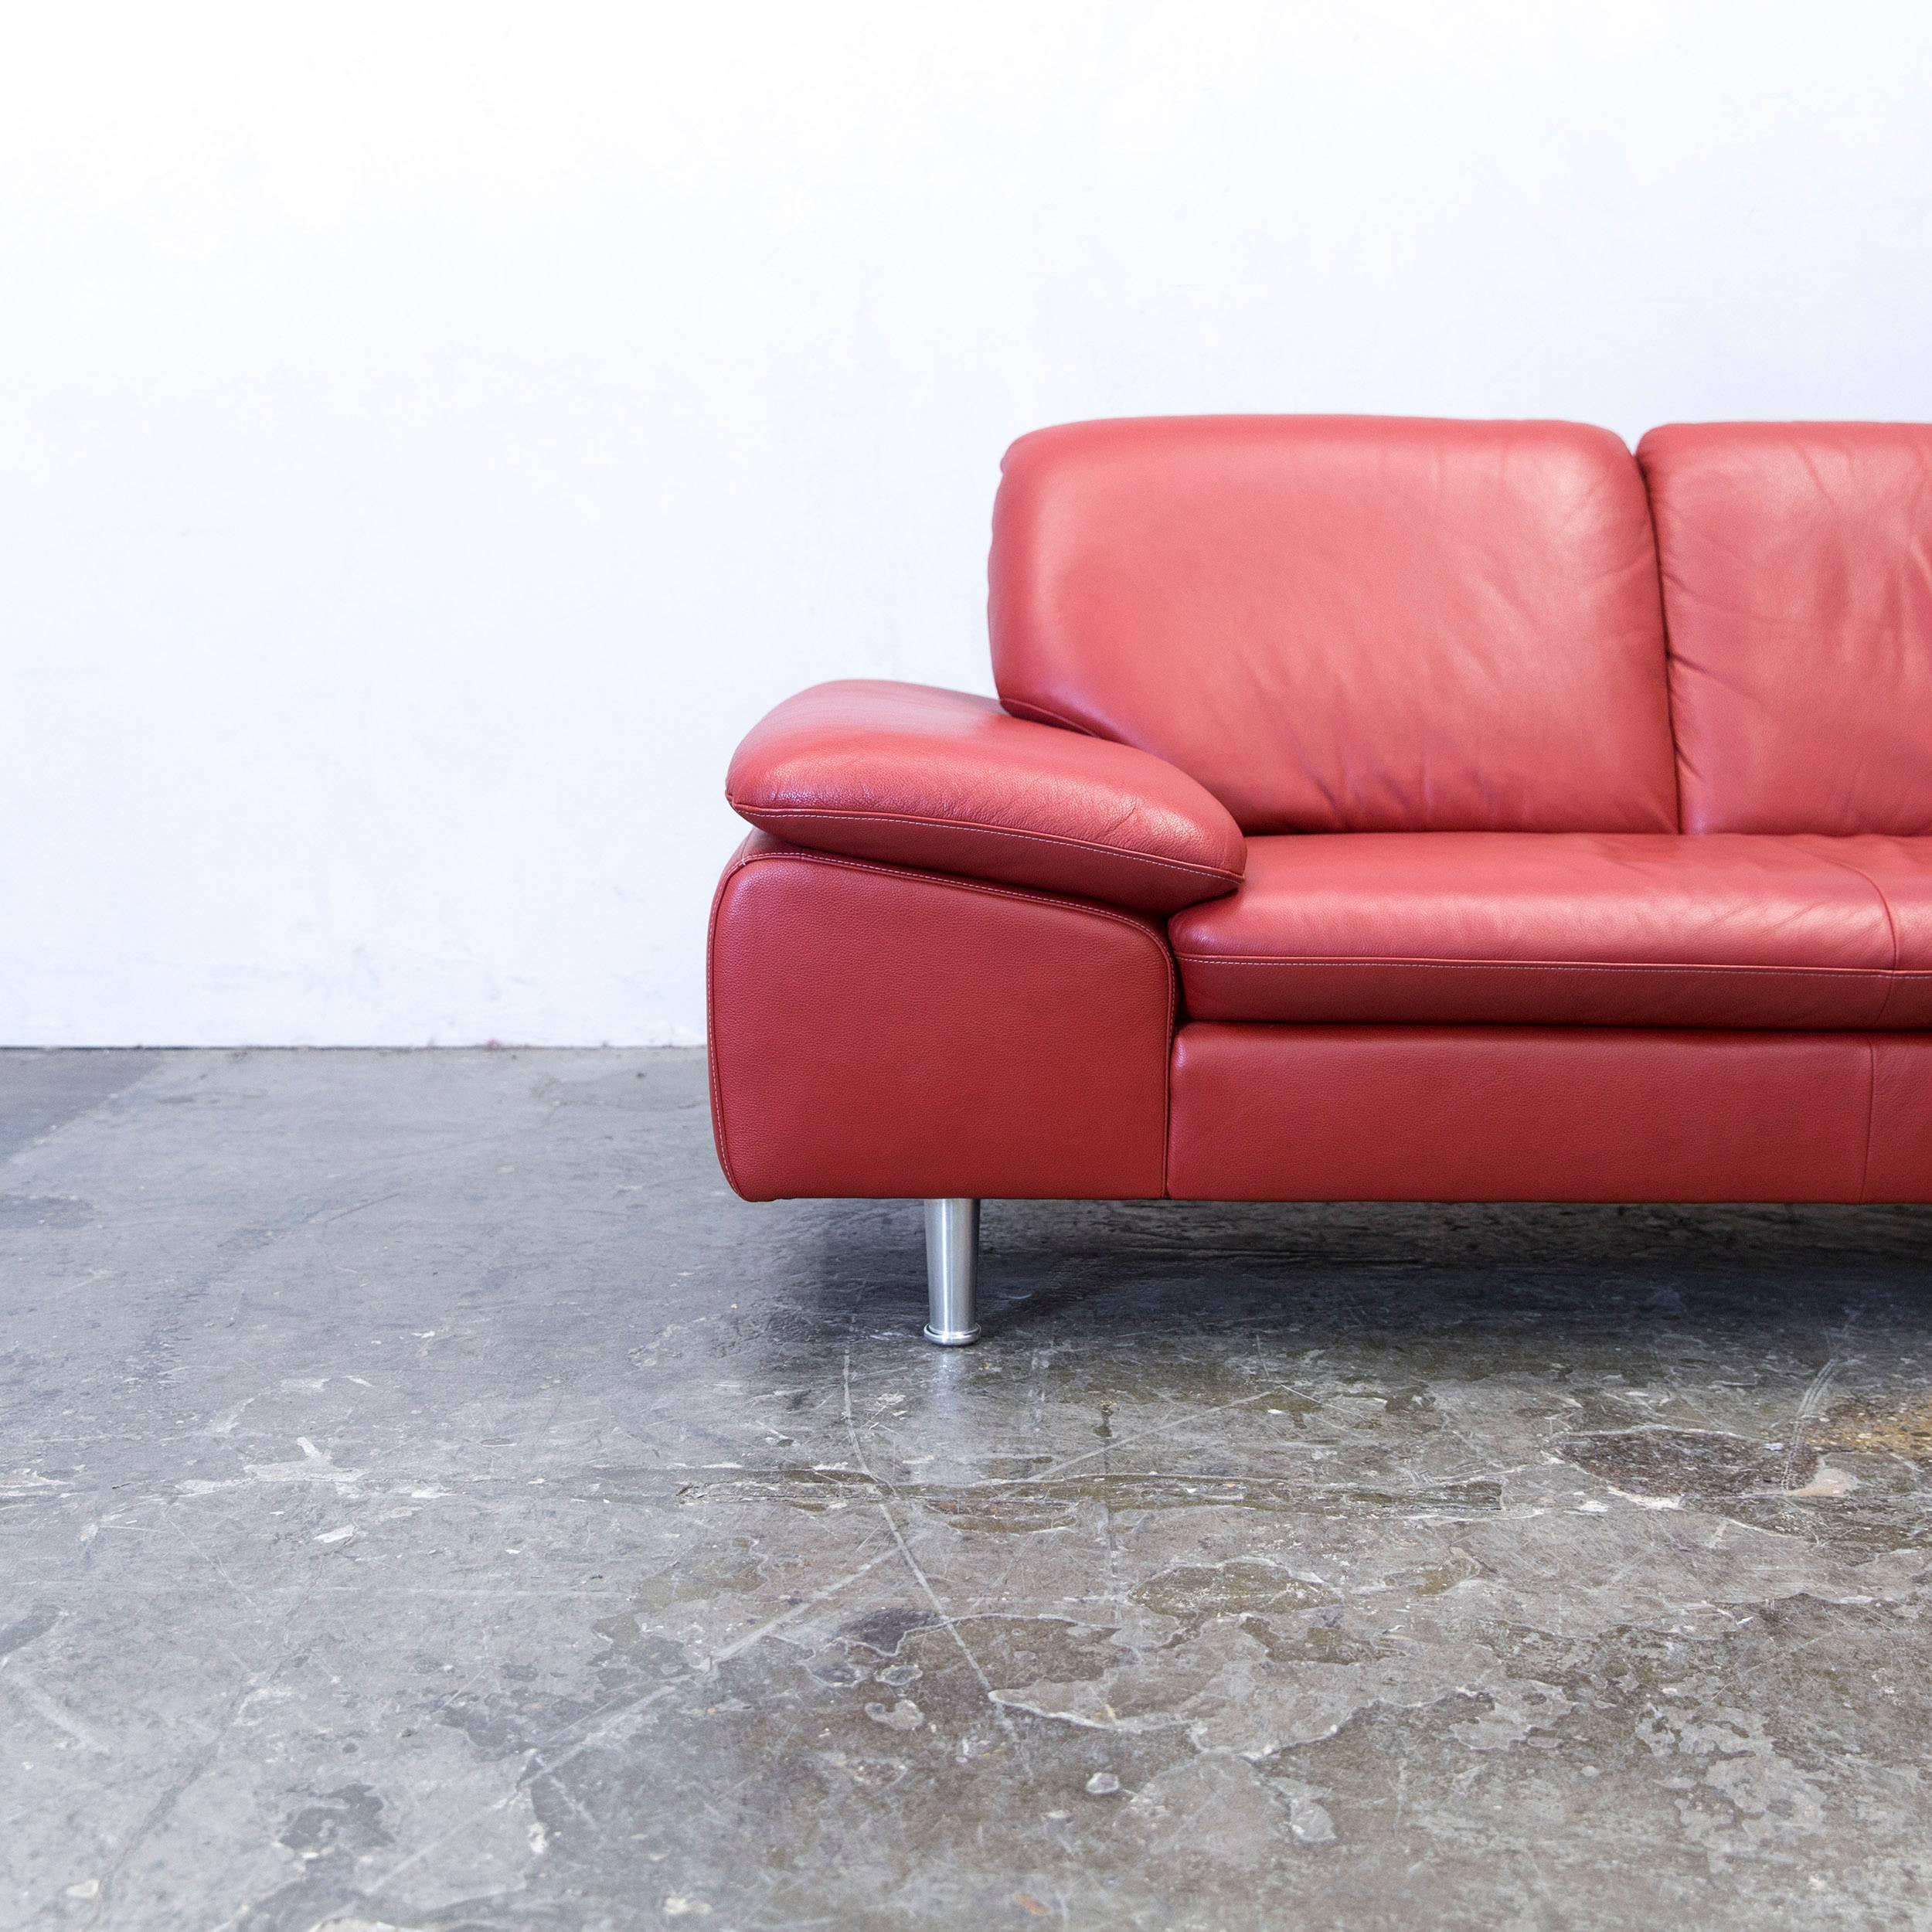 Red colored original Willi Schillig loop designer corner sofa, in a minimalistic and modern design, made for pure comfort.